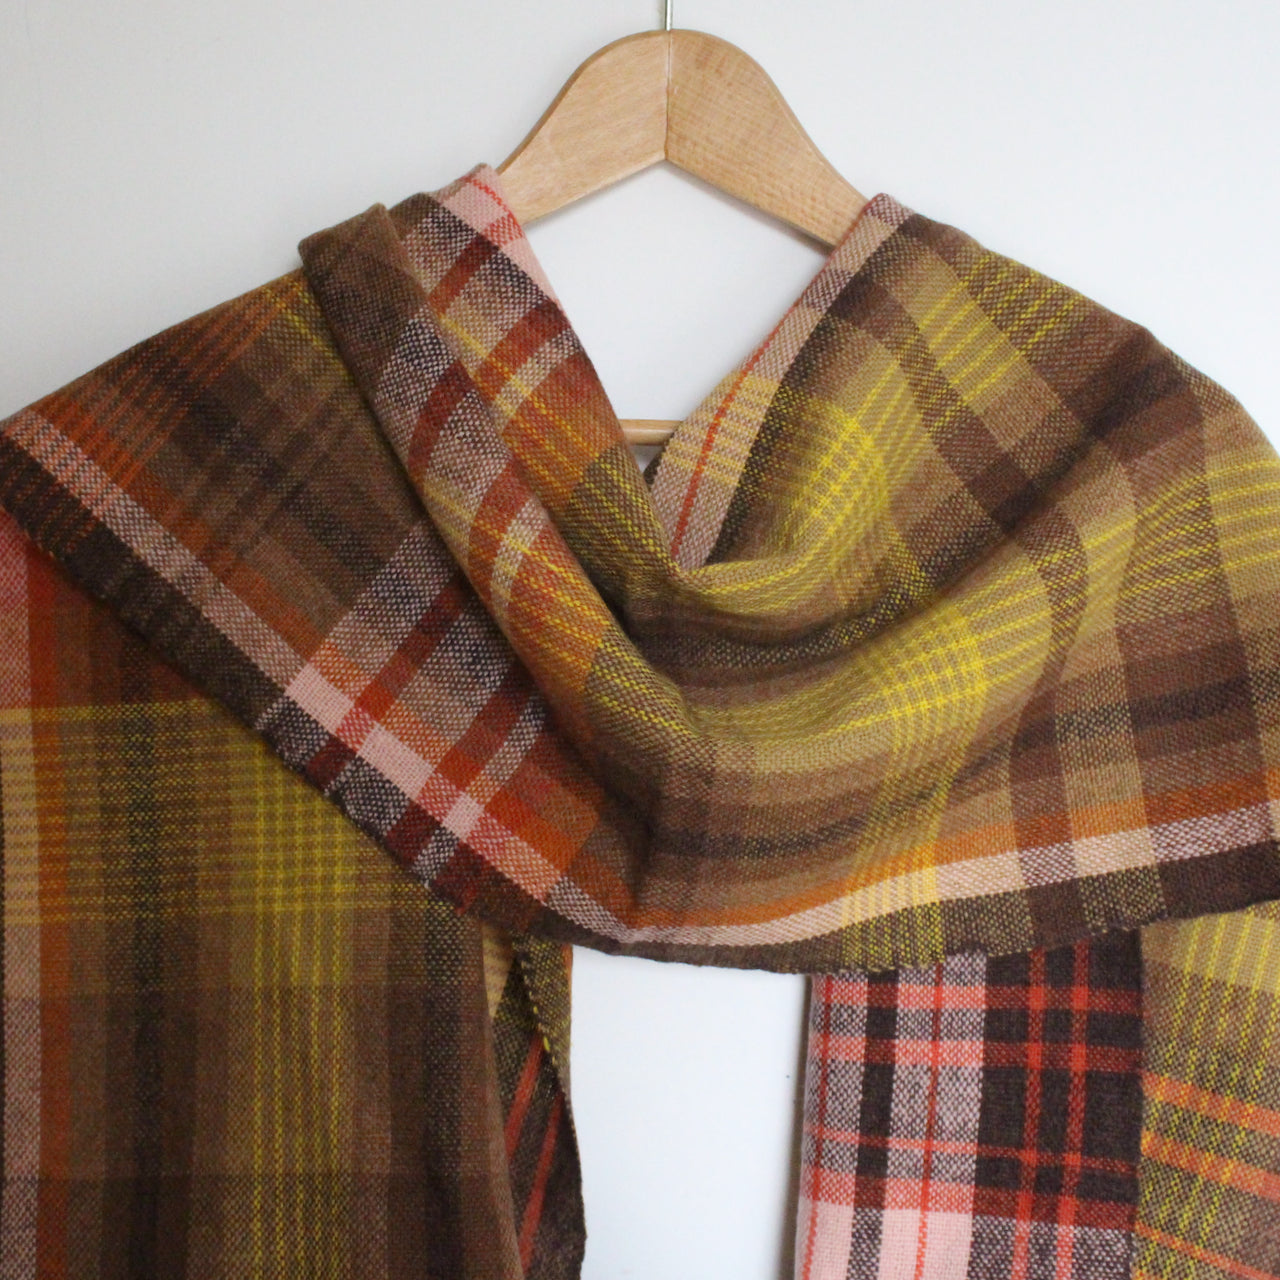 handwoven woollen scarf by Teresa Dunne Cornish weaver in brown, orange and yellow.